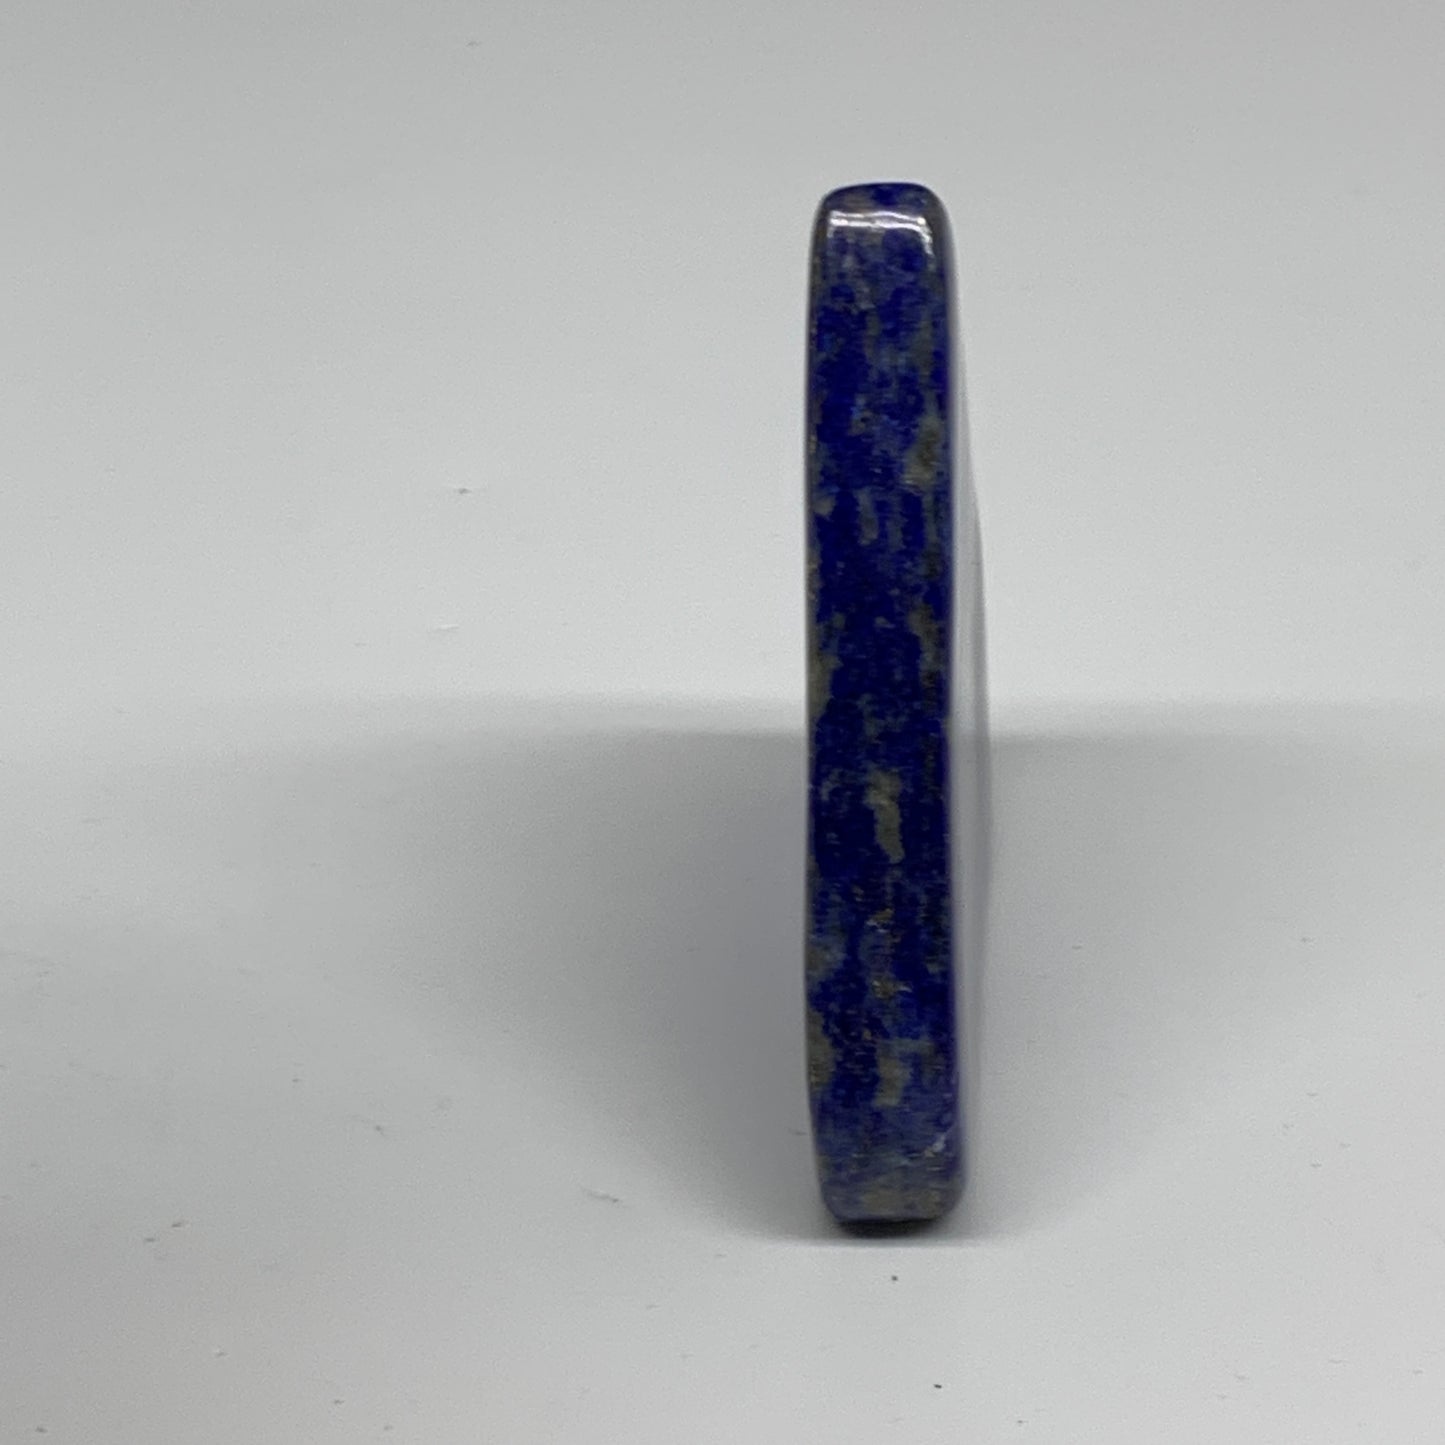 0.41 lbs, 3.6"x3.1"x0.6", Natural Freeform Lapis Lazuli from Afghanistan, B32978